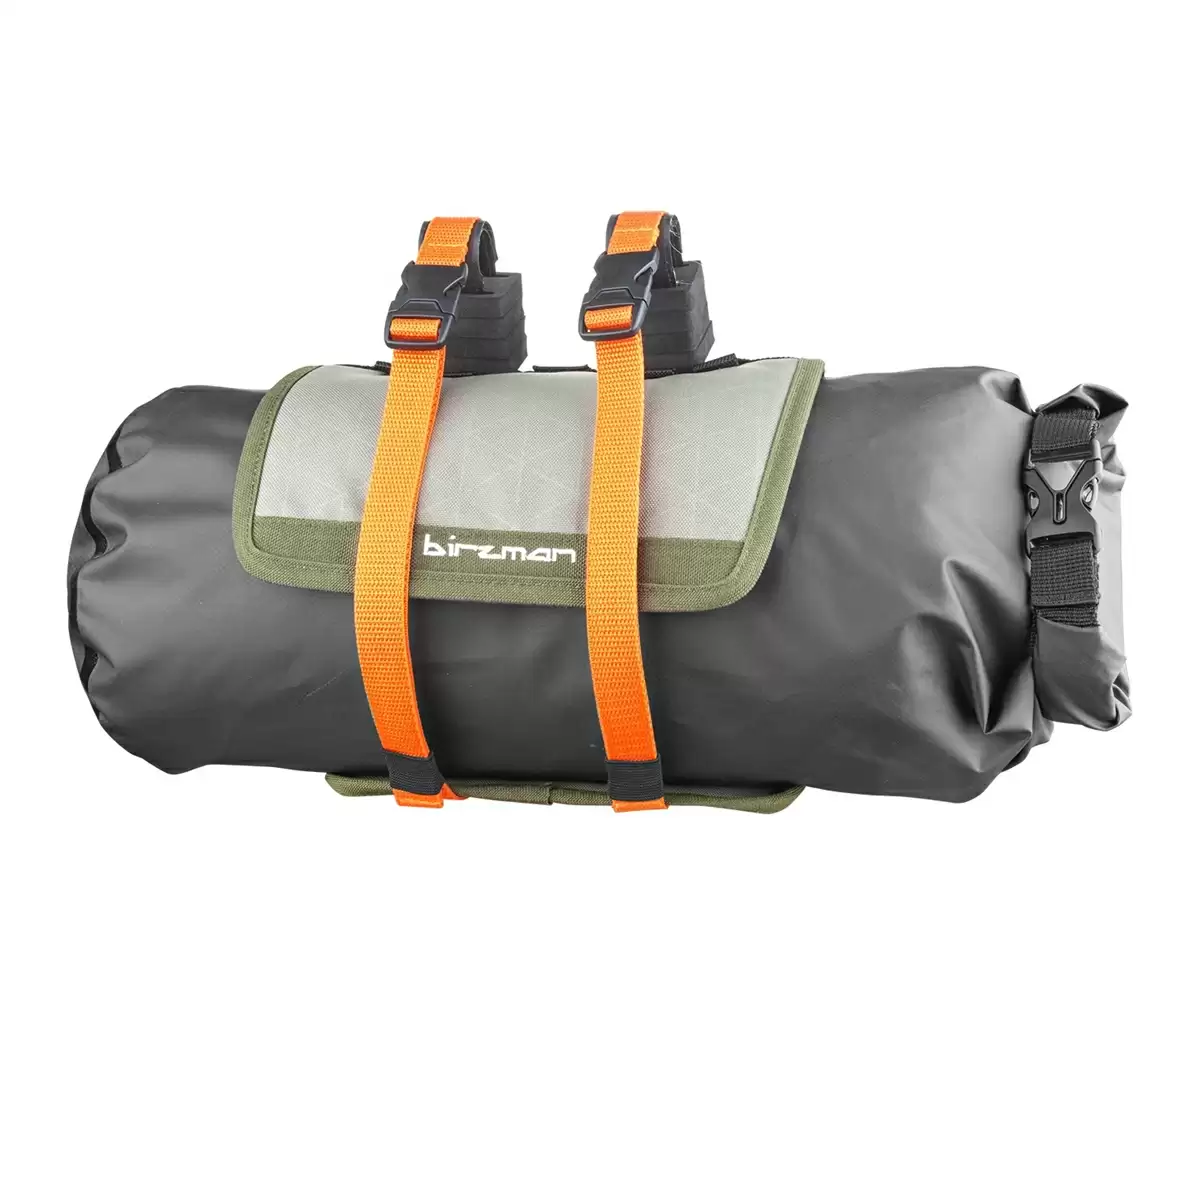 Packman handlebar pack bag 9,5lt green - image